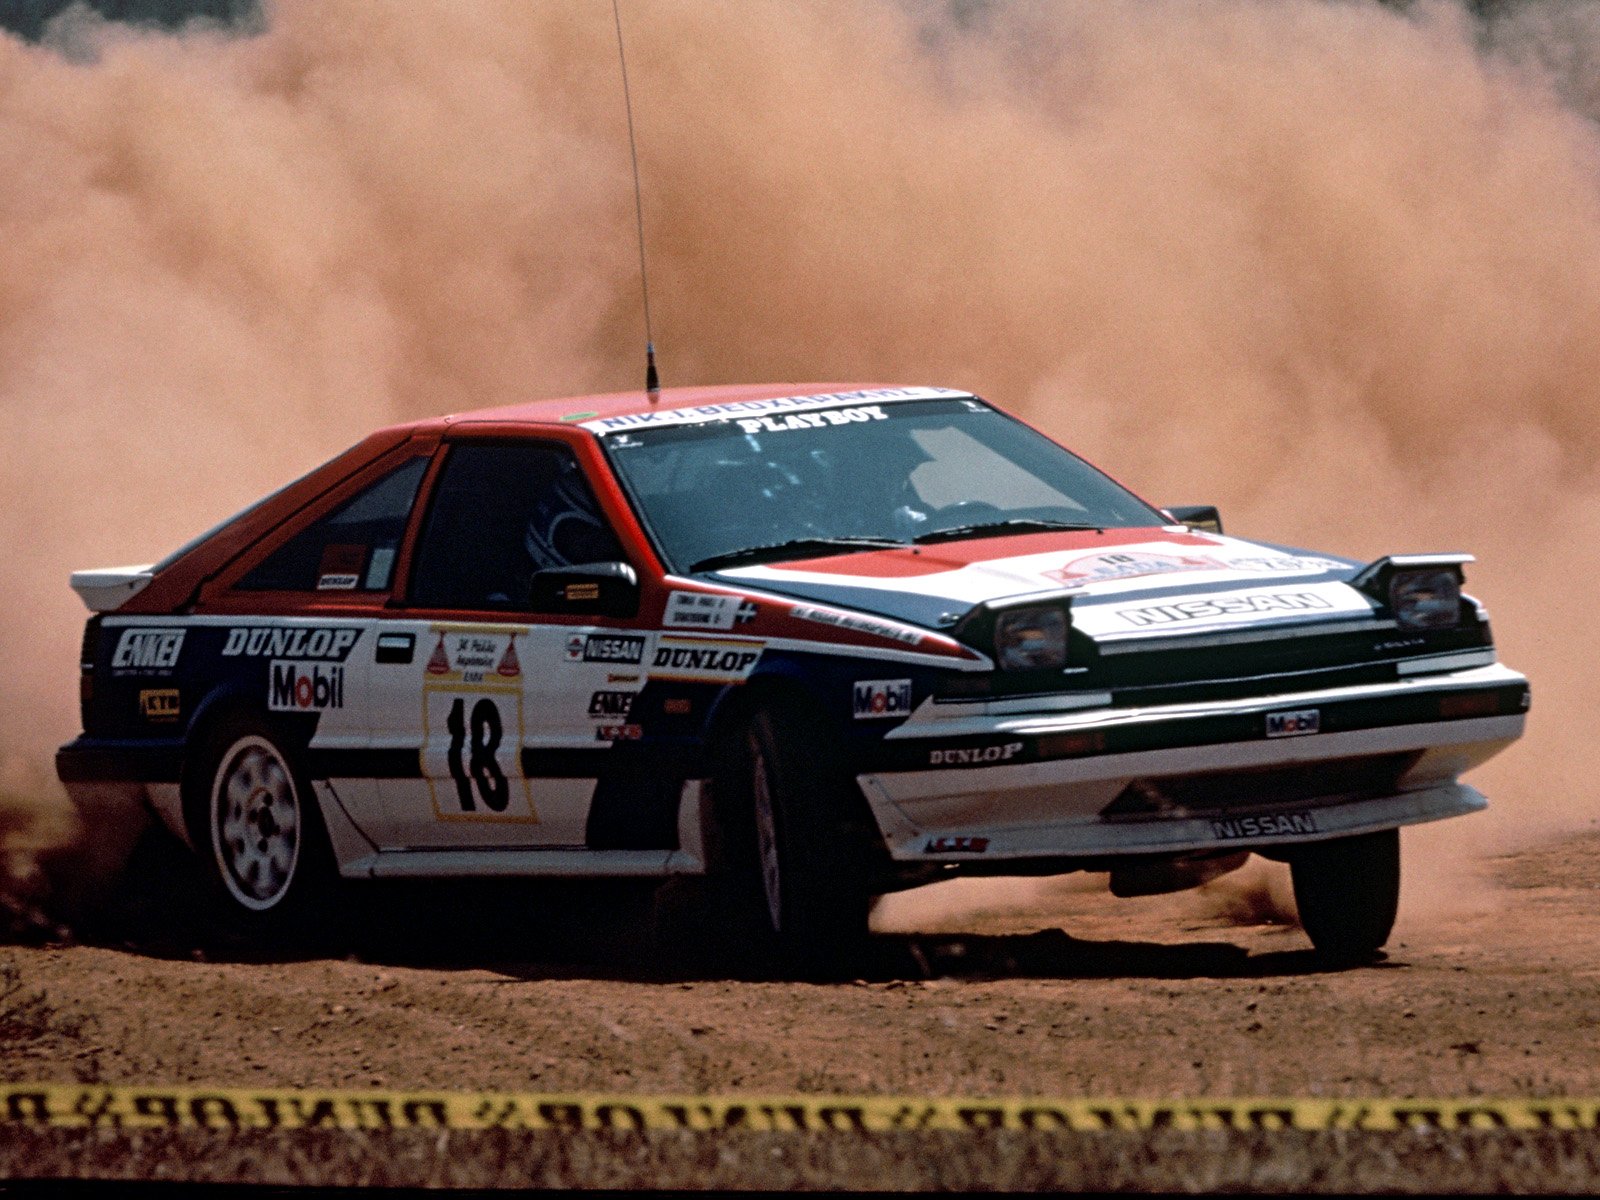 1987, Nissan, Silvia, 200sx, Rvs12, Wrc, Race, Racing, Rally Wallpaper